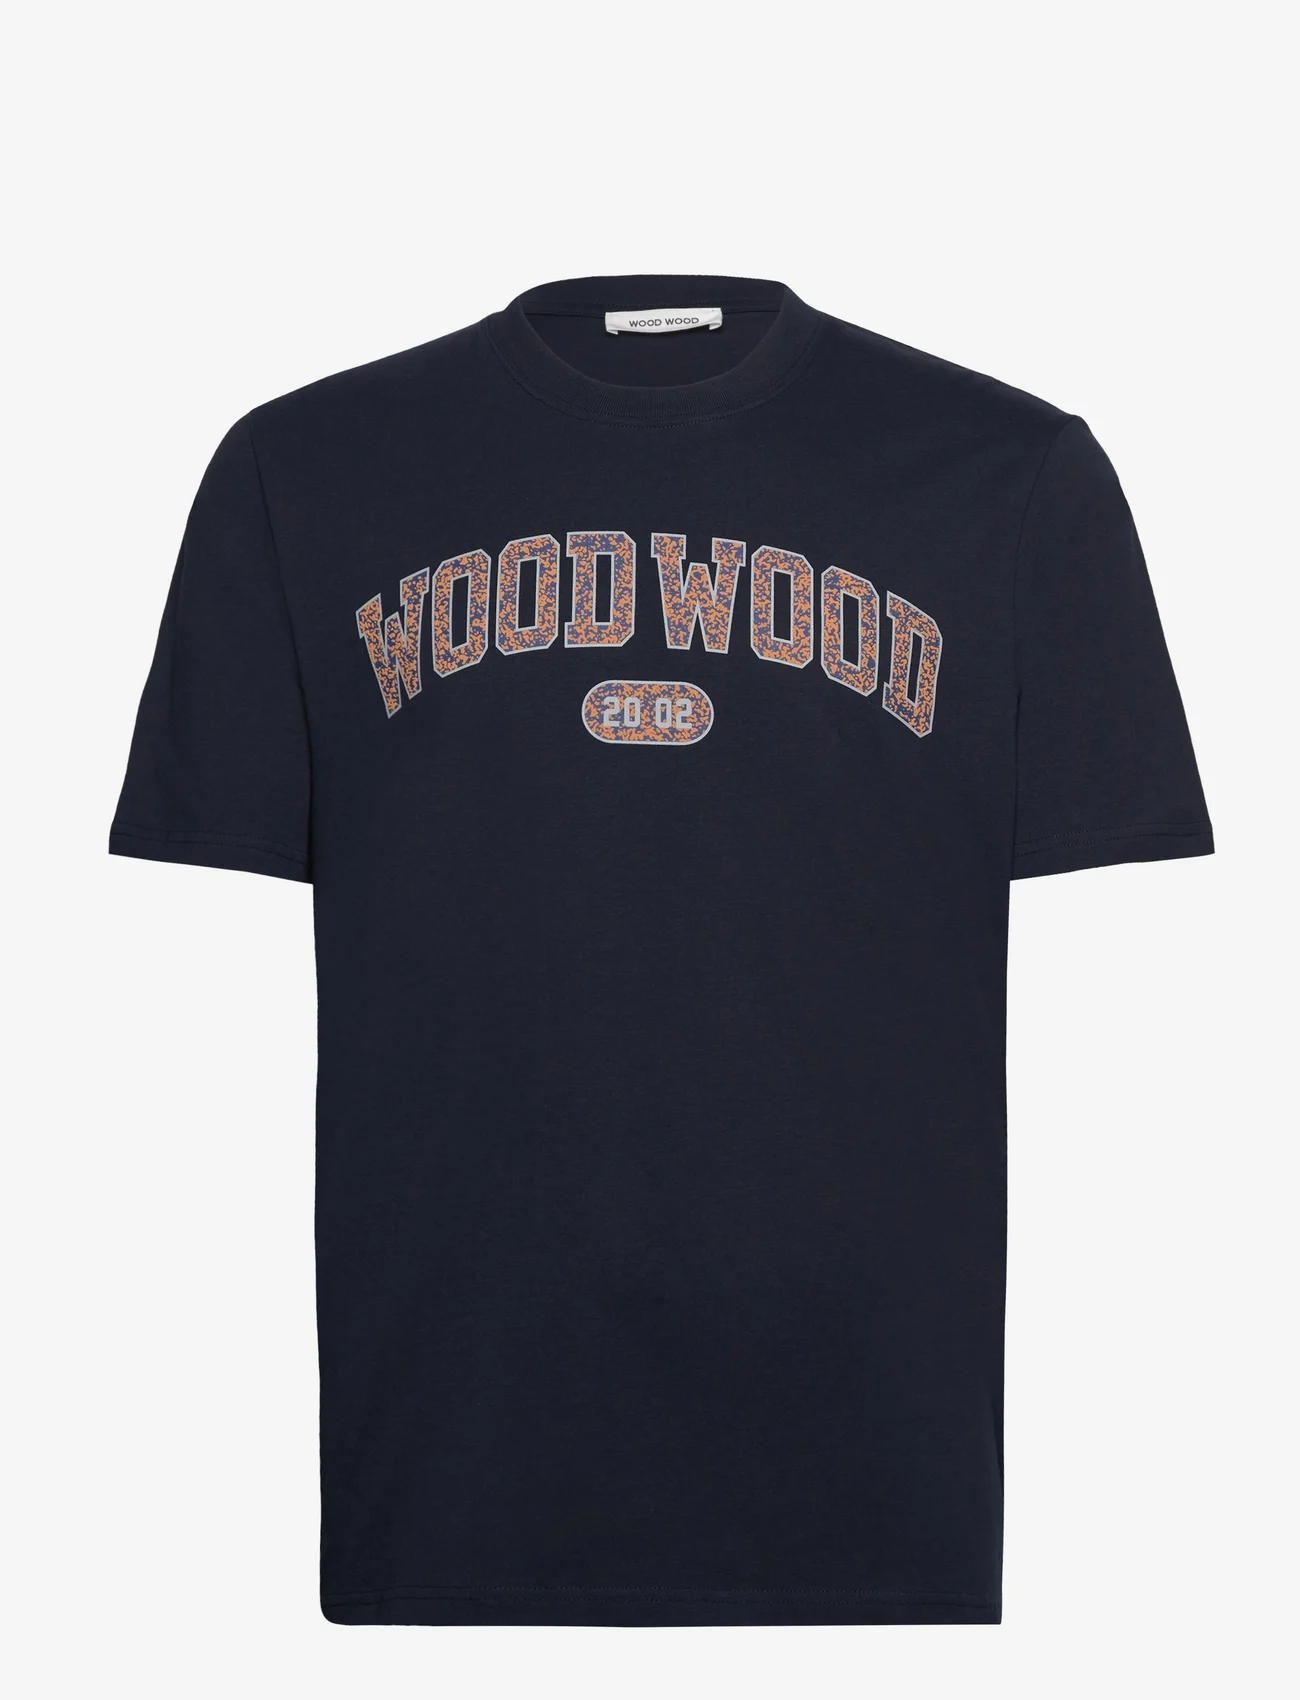 Wood Wood - Bobby IVY T-shirt - navy - 0